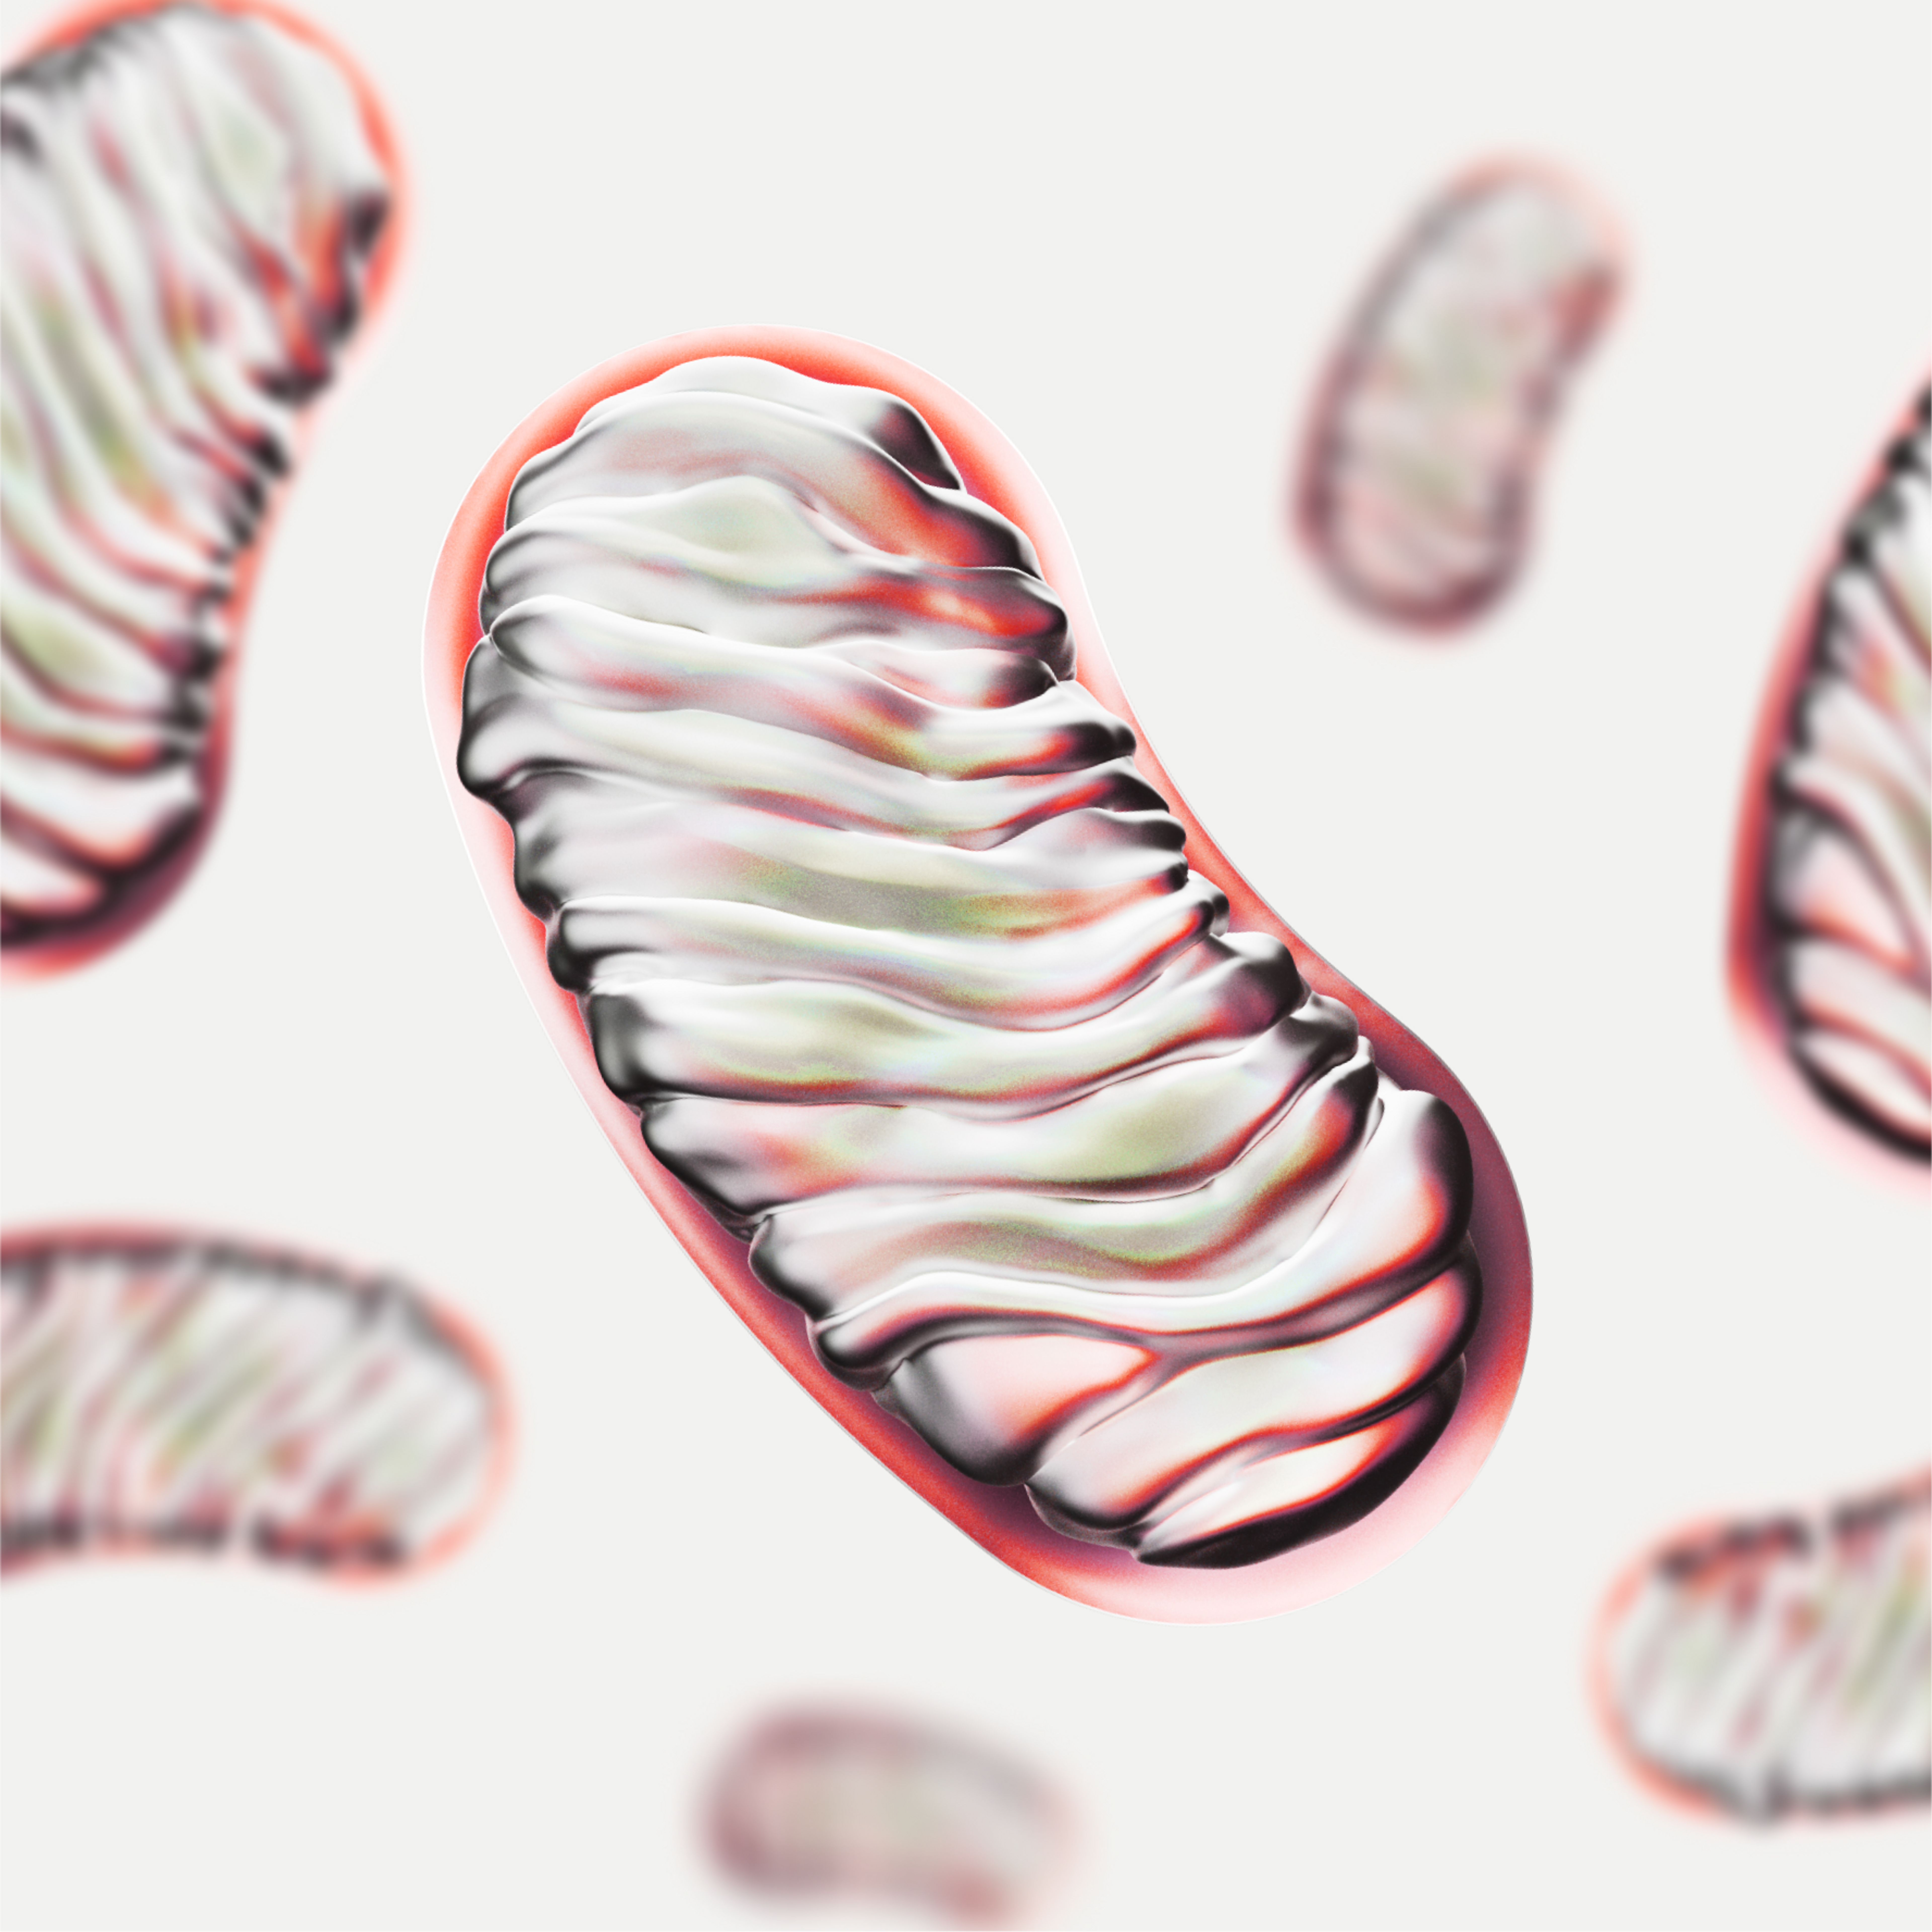 Mitochondrial biogenesis